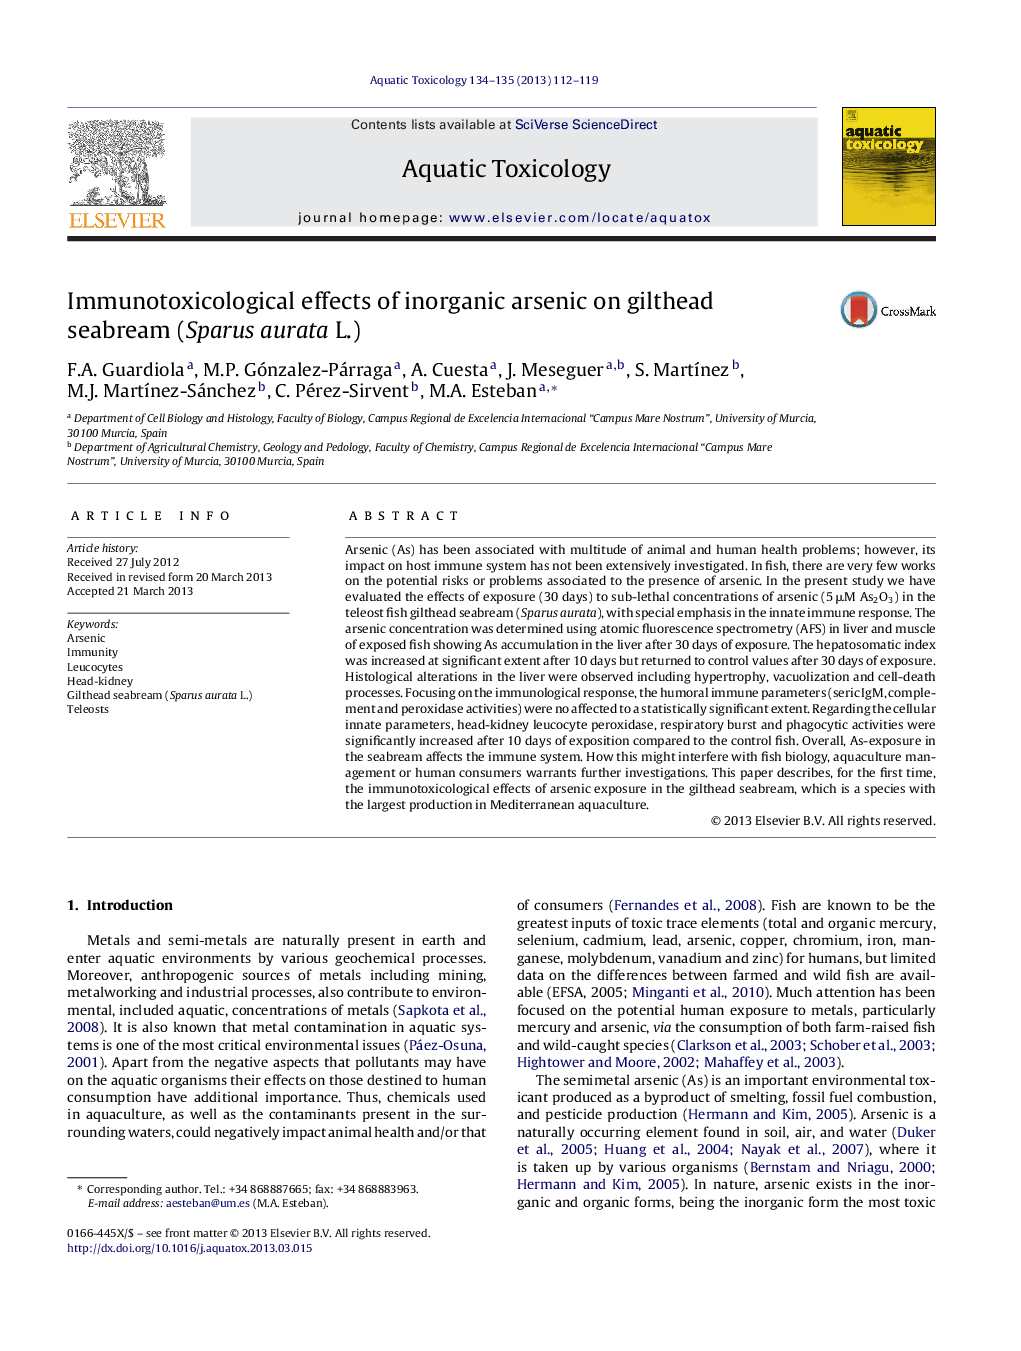 Immunotoxicological effects of inorganic arsenic on gilthead seabream (Sparus aurata L.)